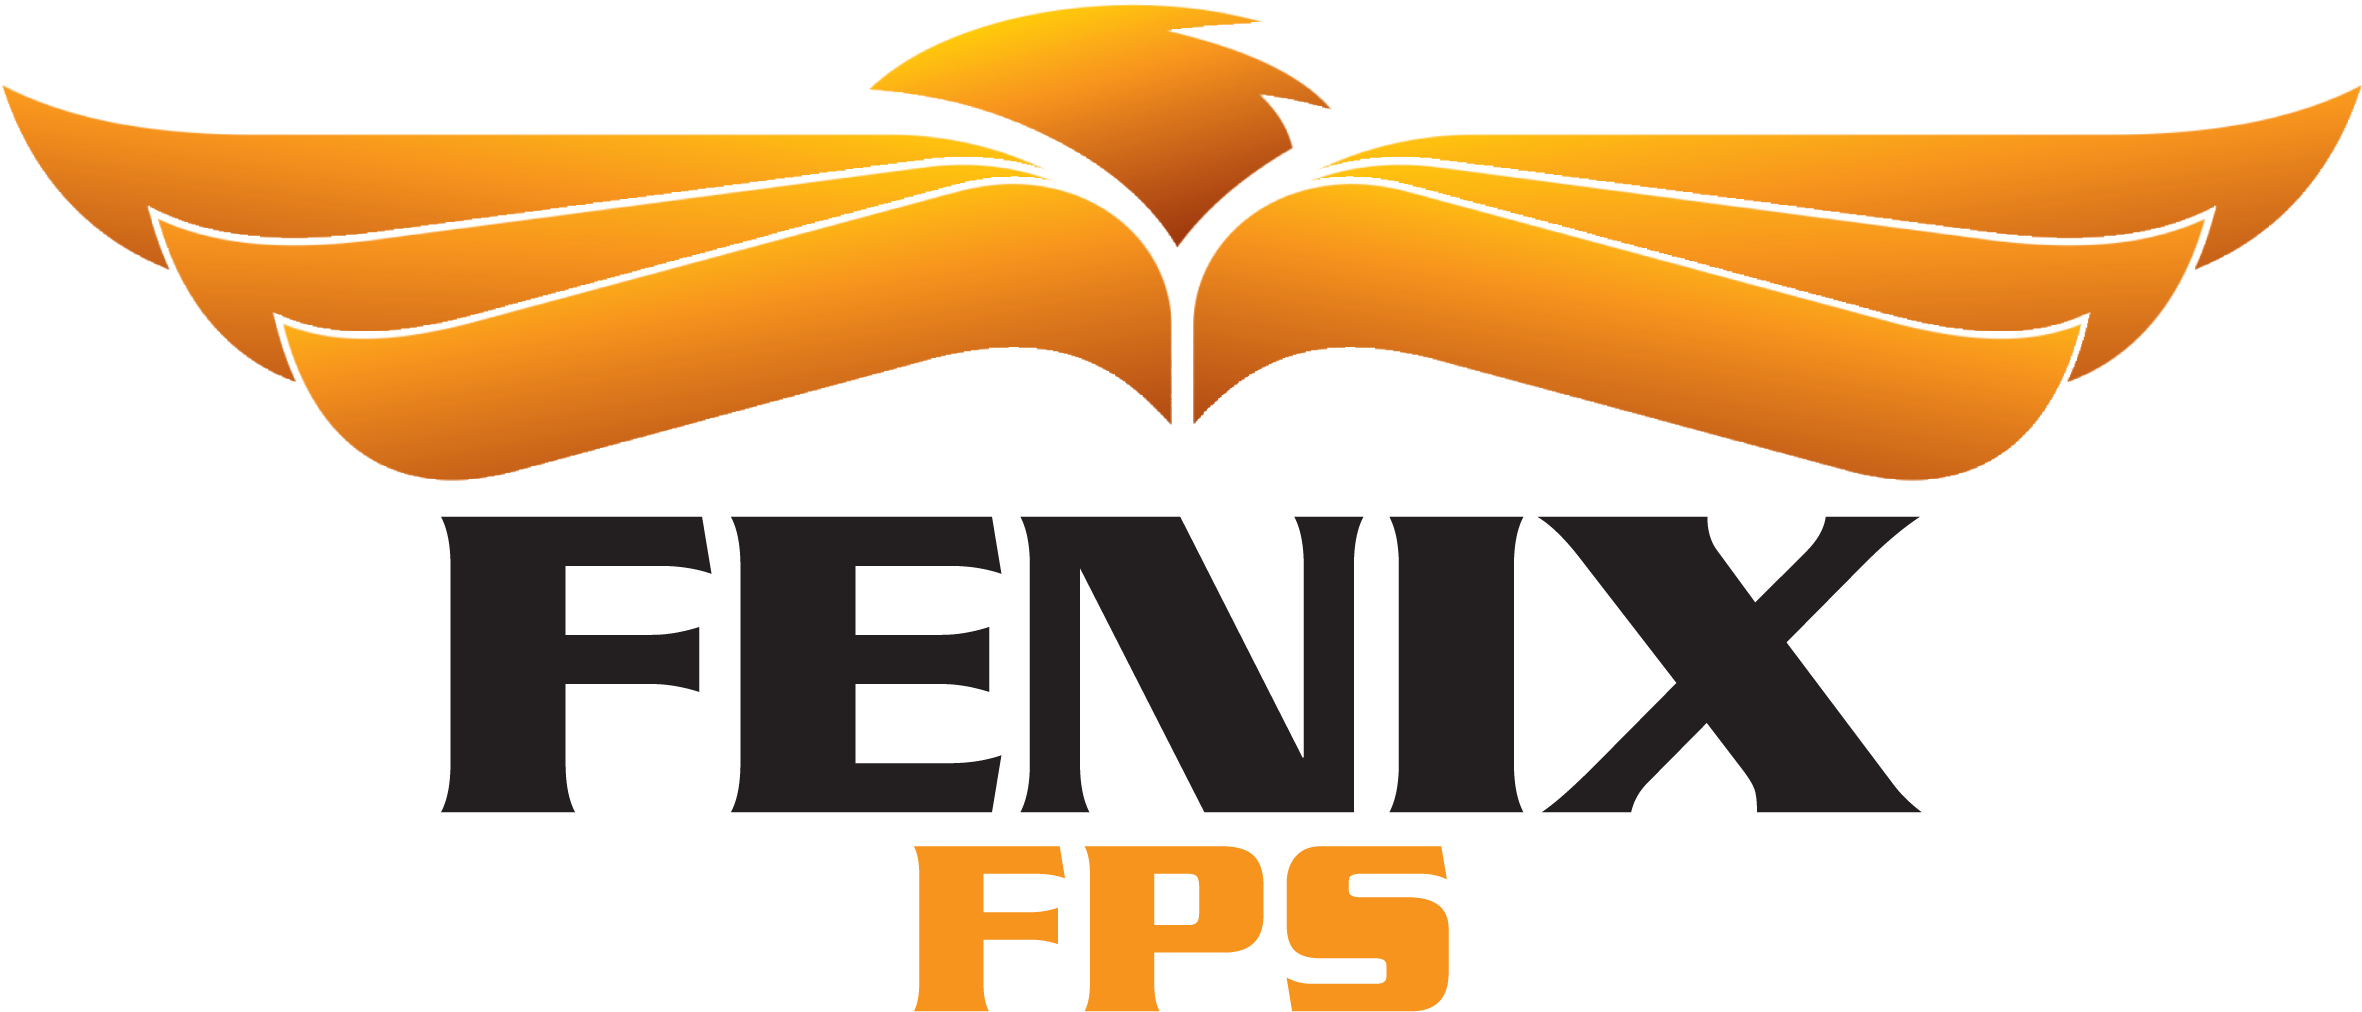 FENIX FPS